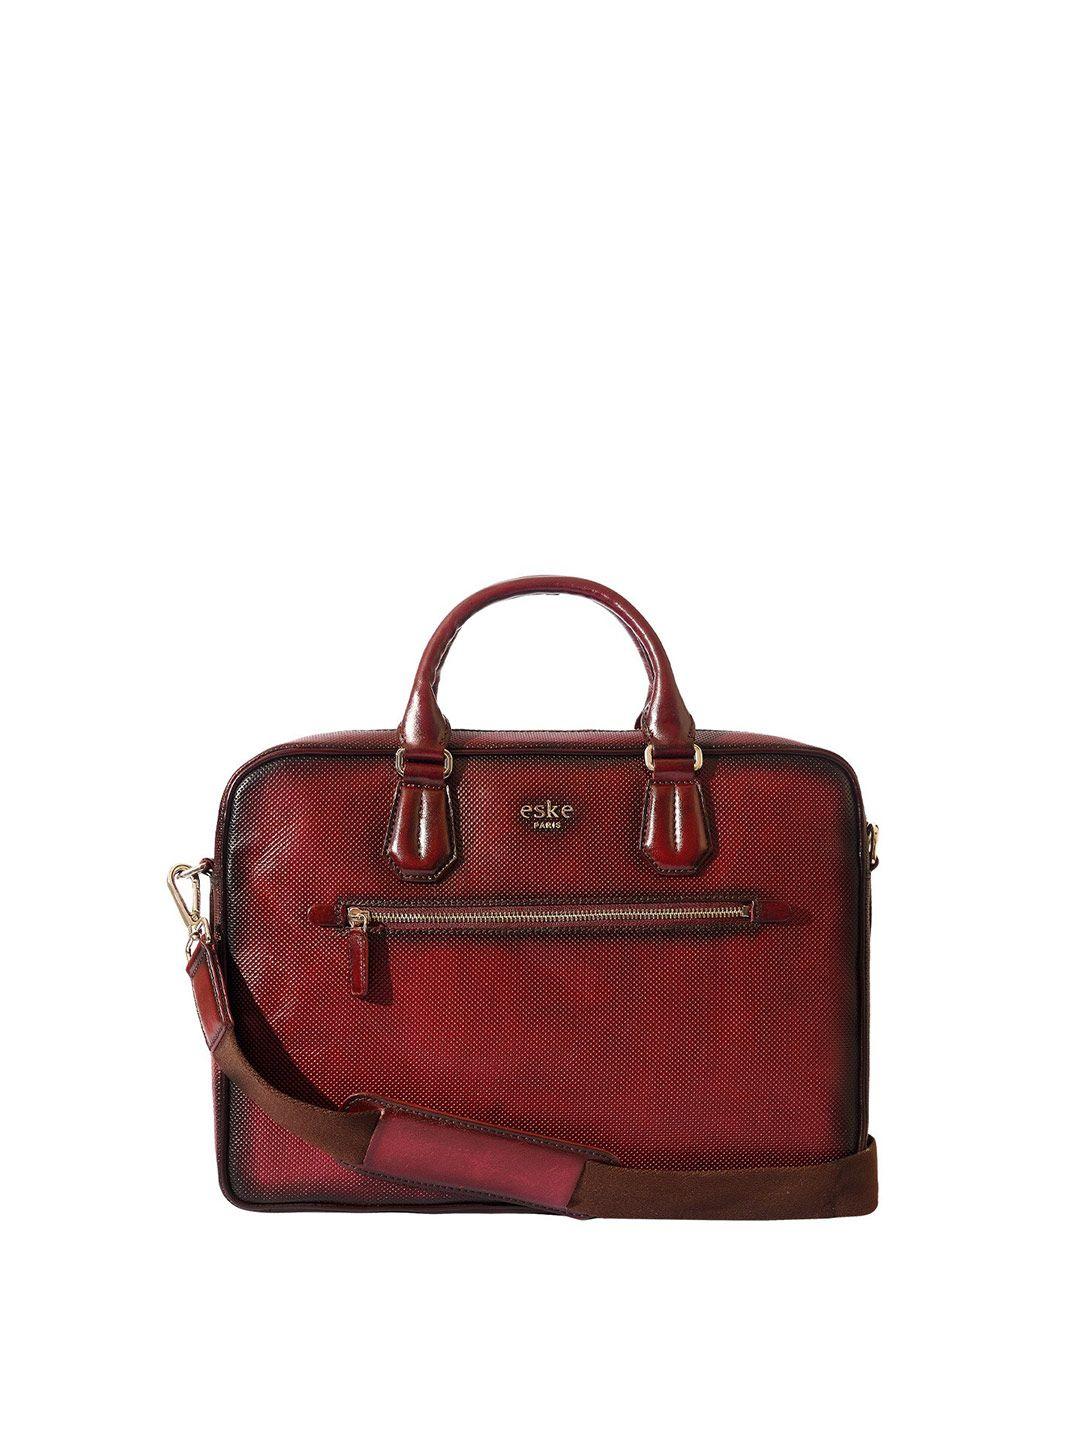 eske men maroon textured leather laptop bag